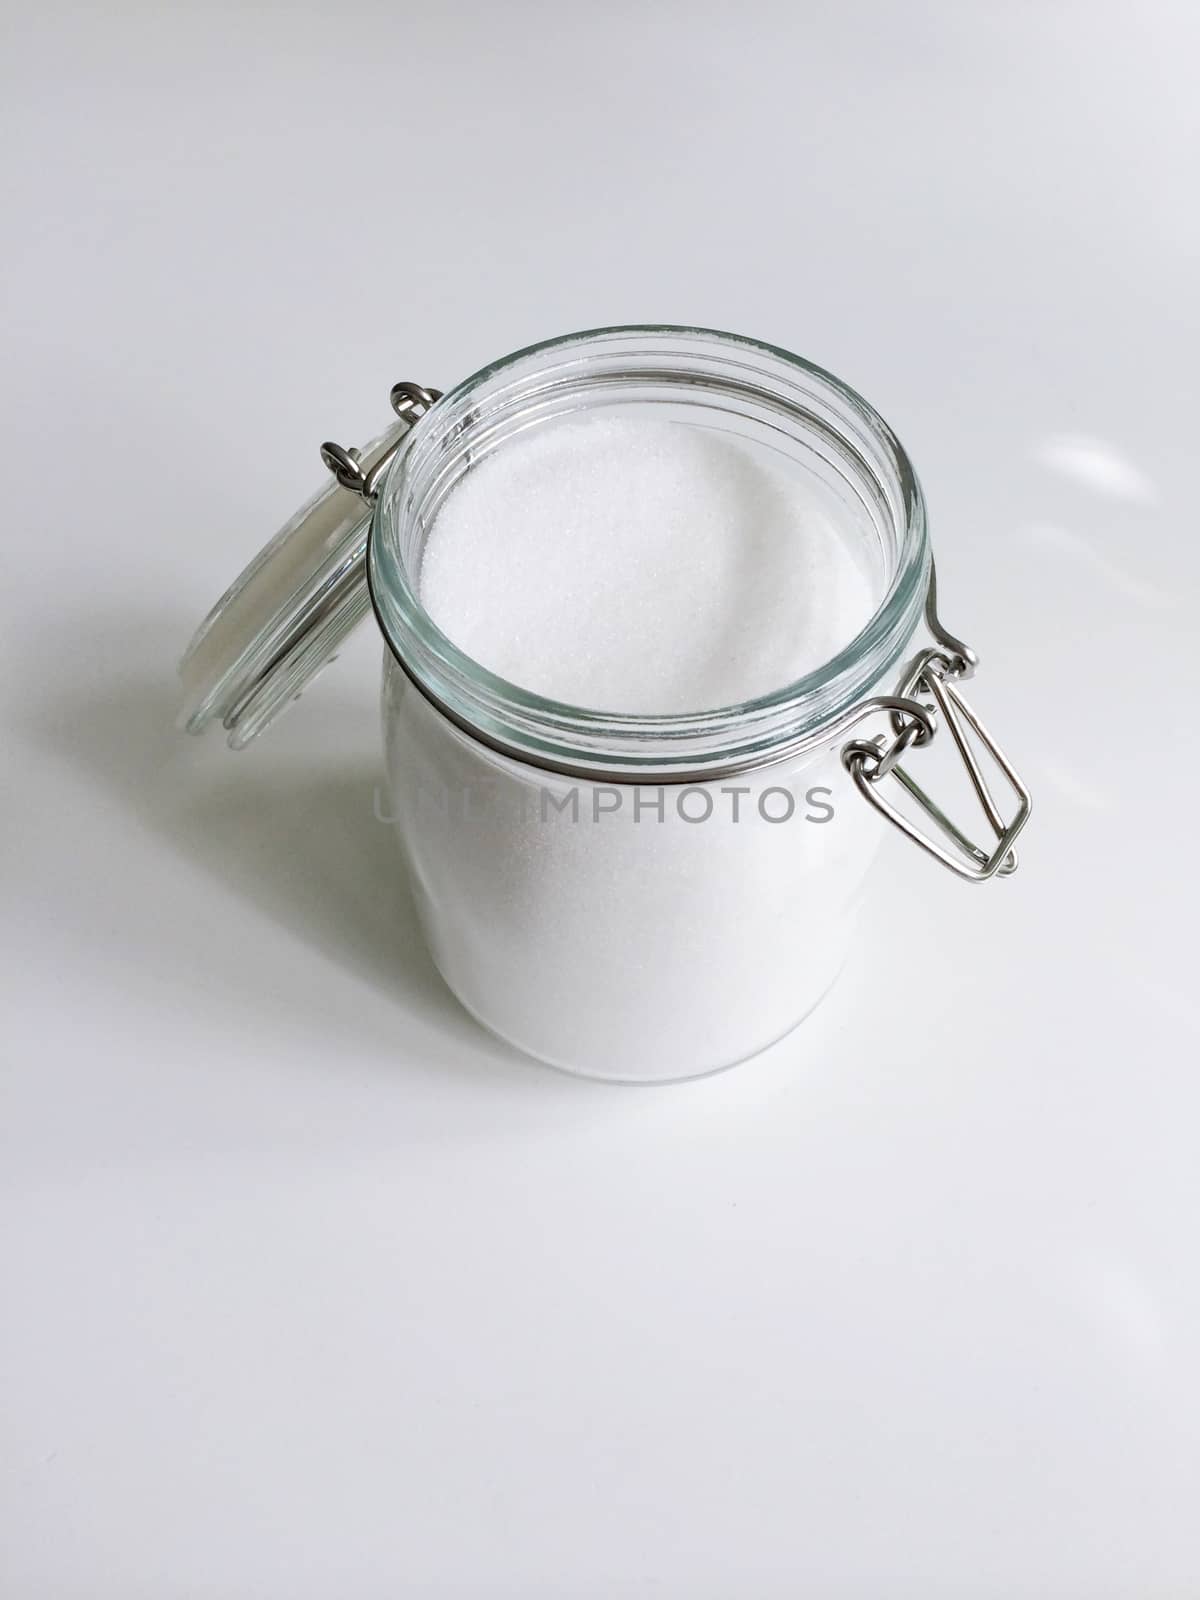 Open jar of refined granulated sugar